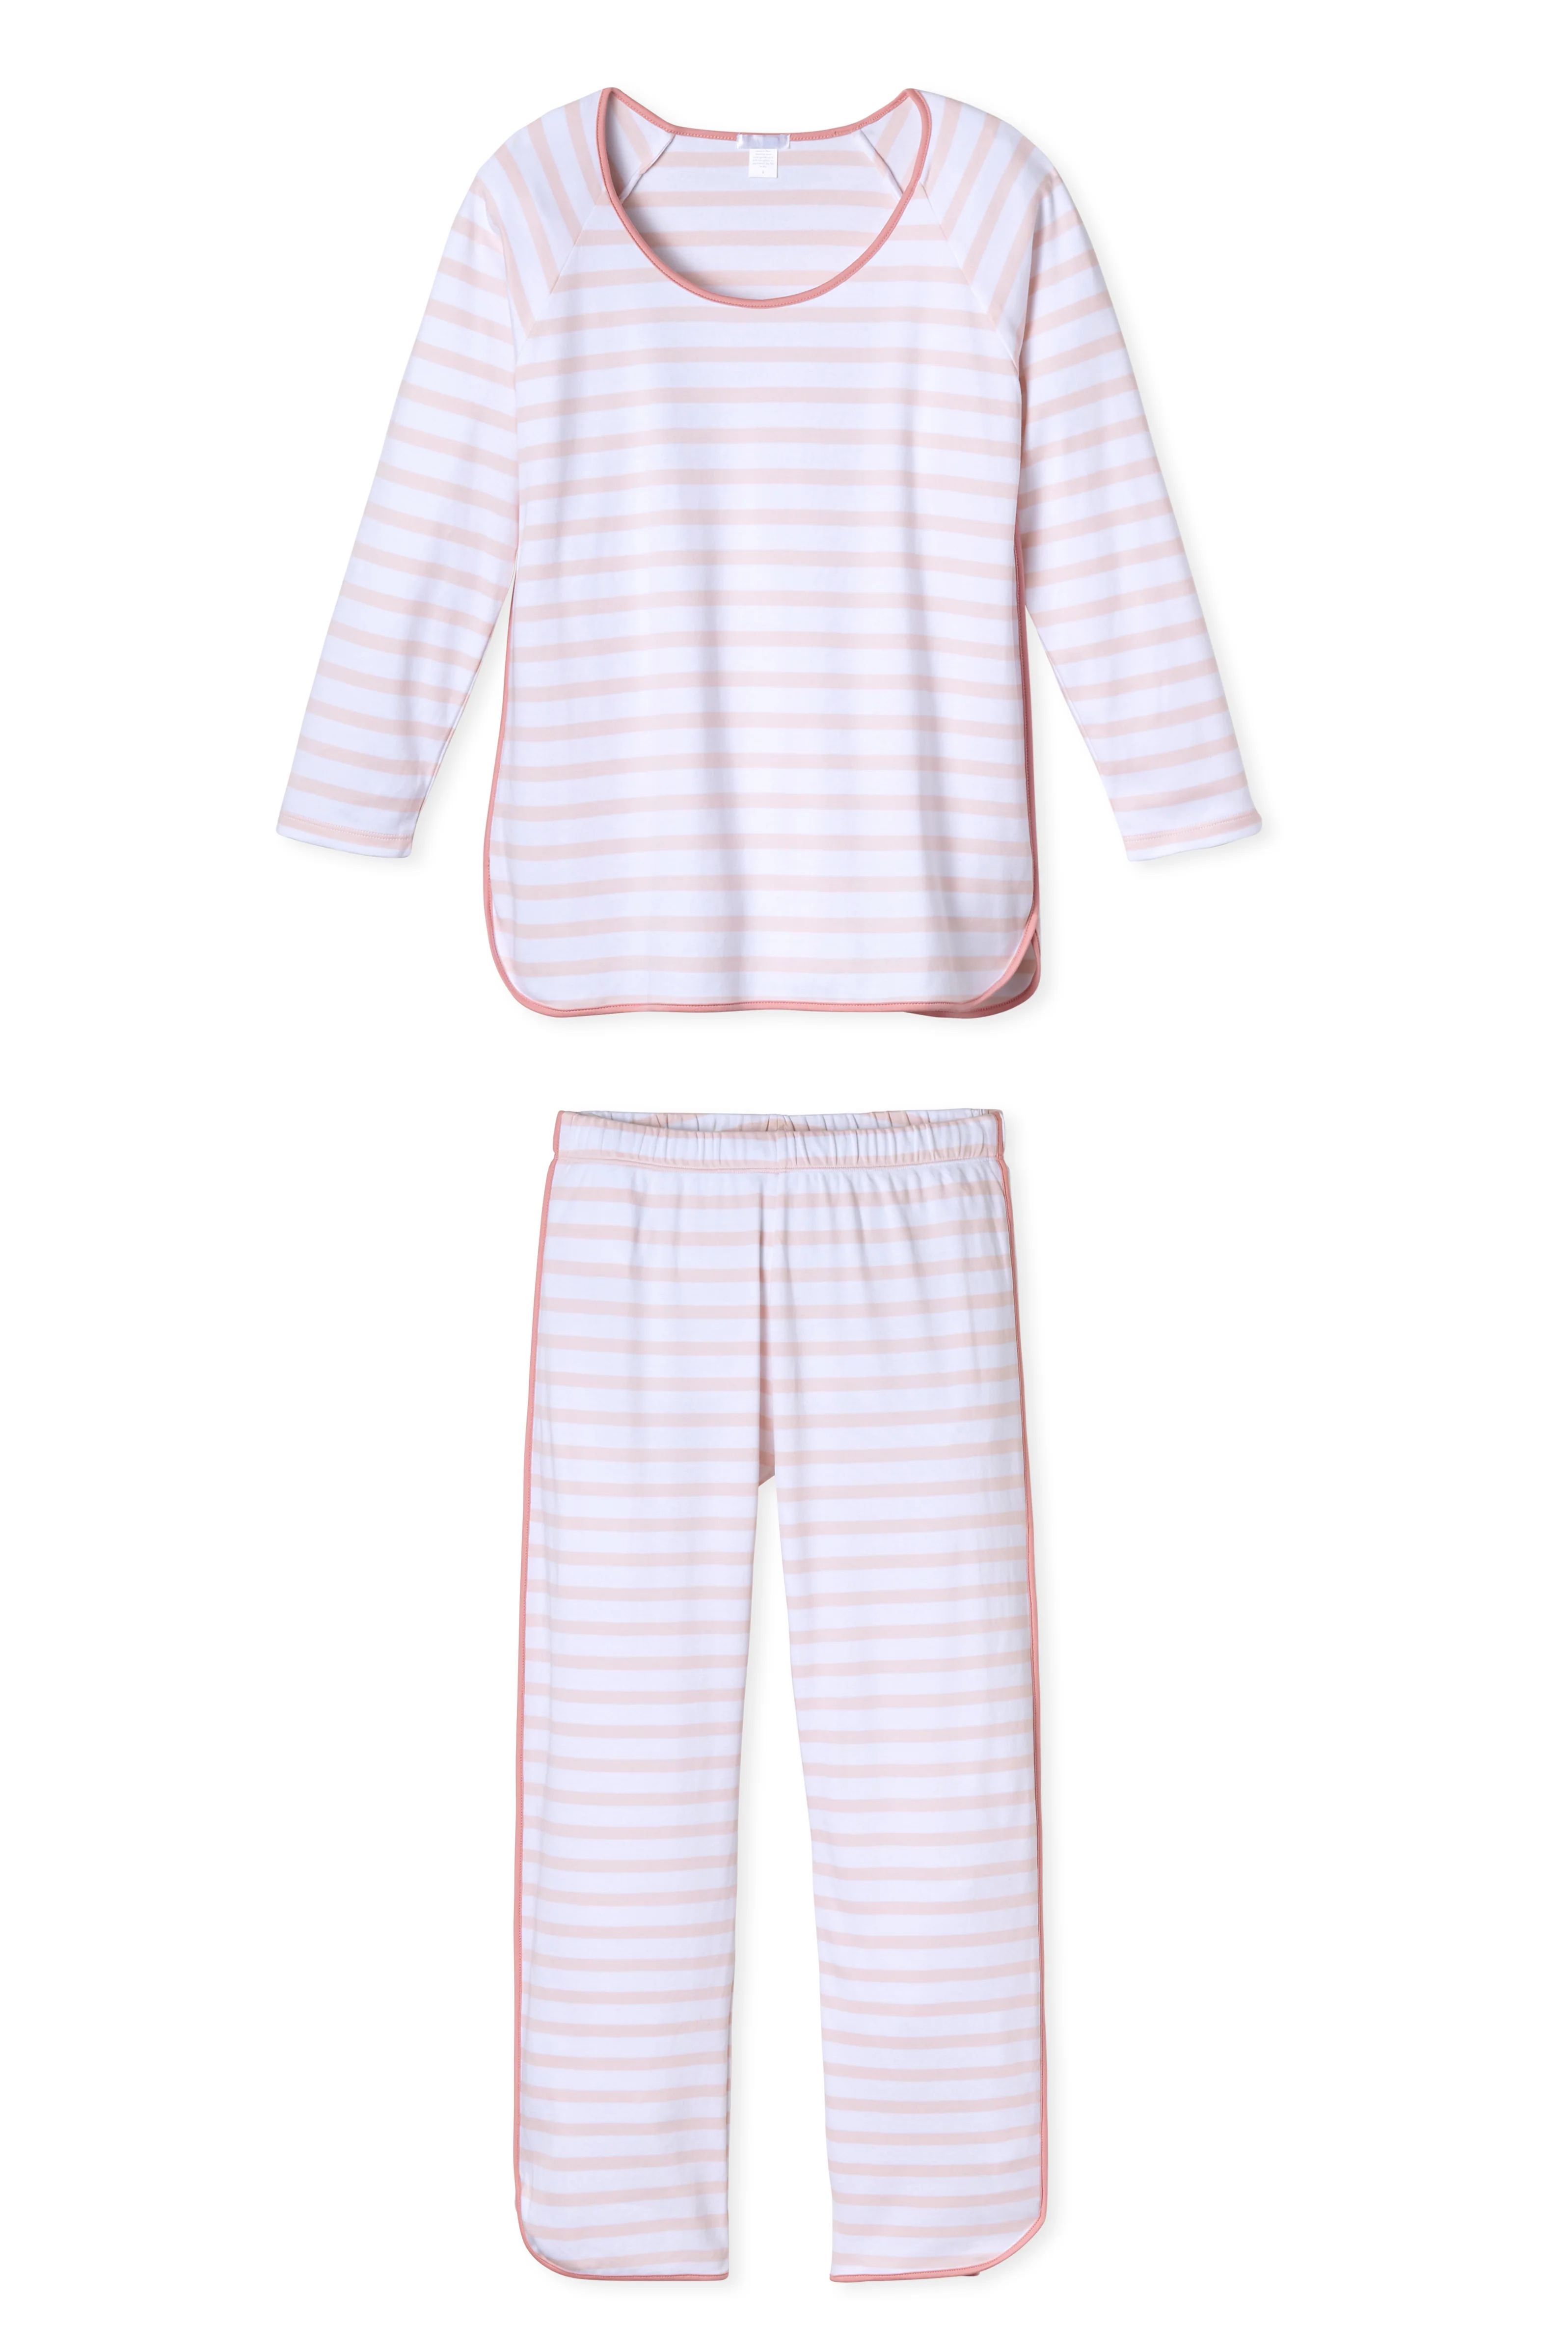 Pima Long-Long Set in Orchard | LAKE Pajamas